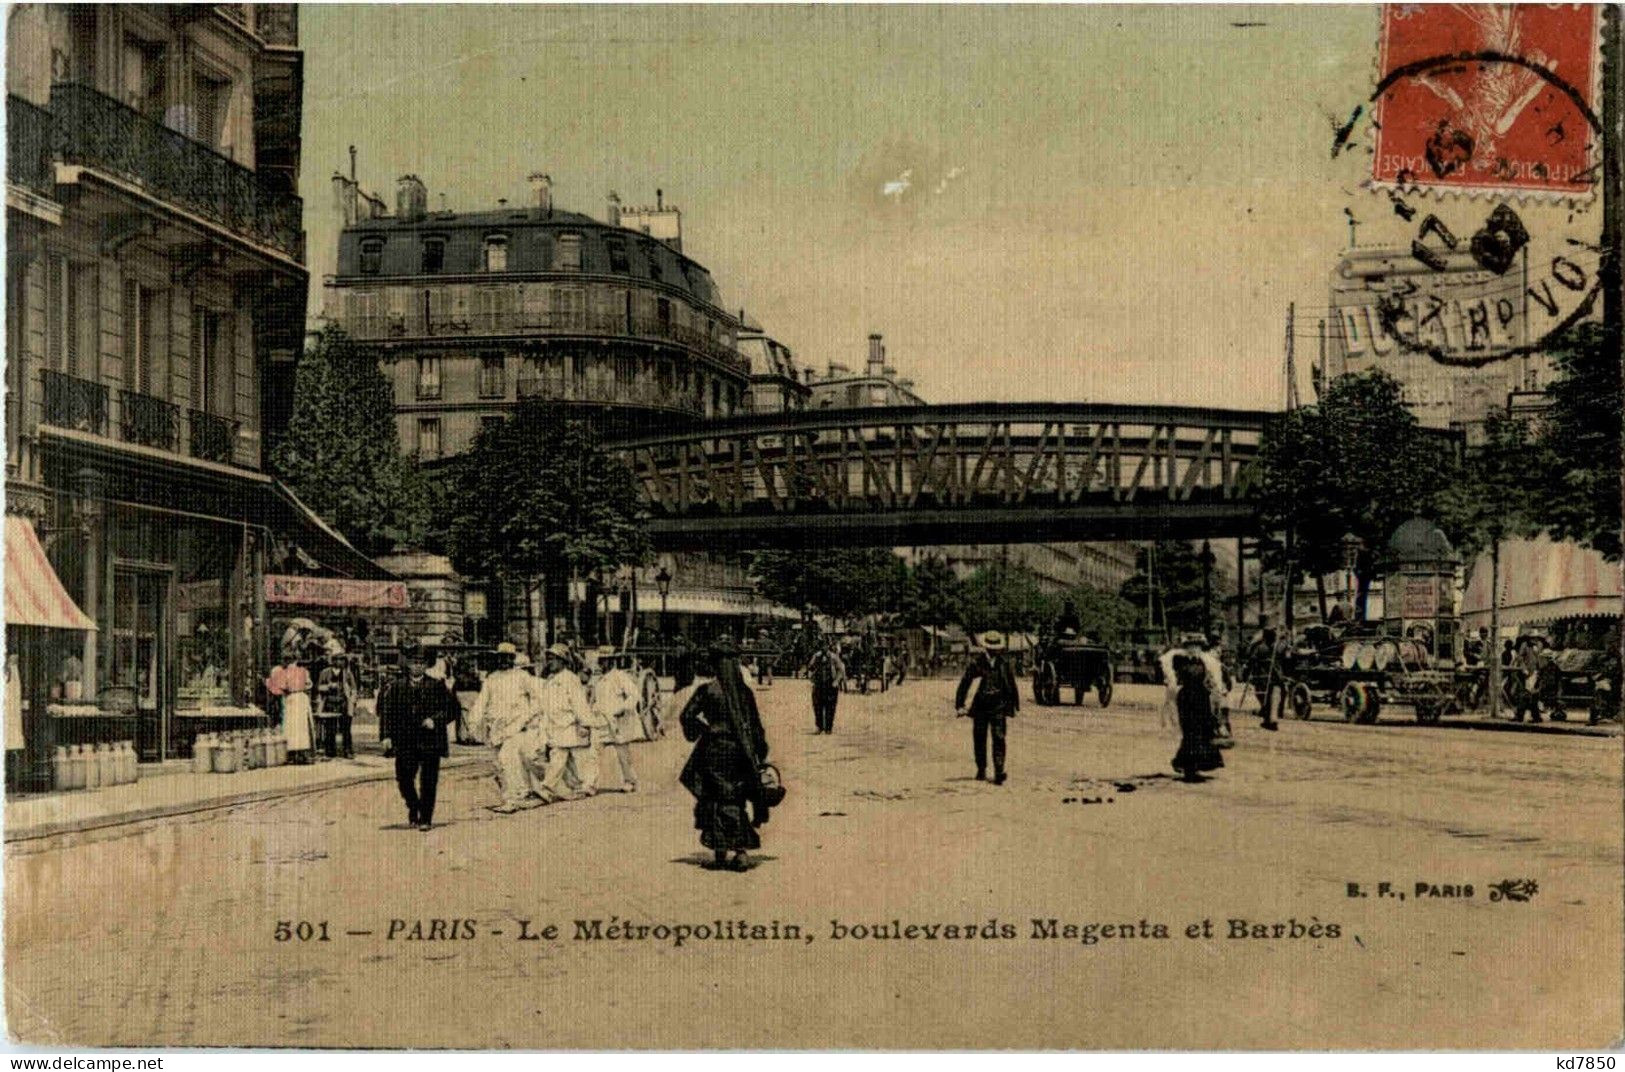 Paris - Metropolitain - Metro, Stations